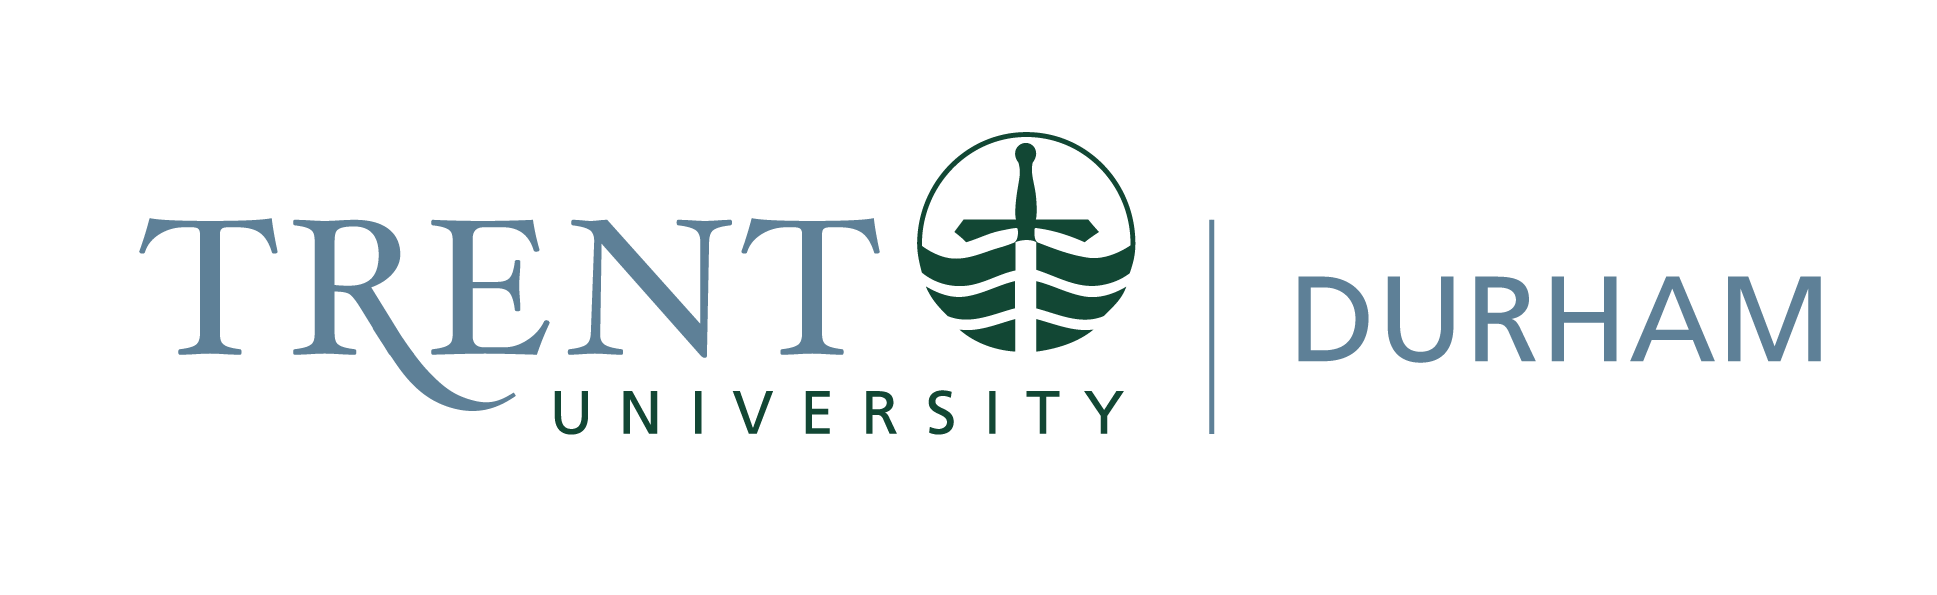 Trent University Durham logo